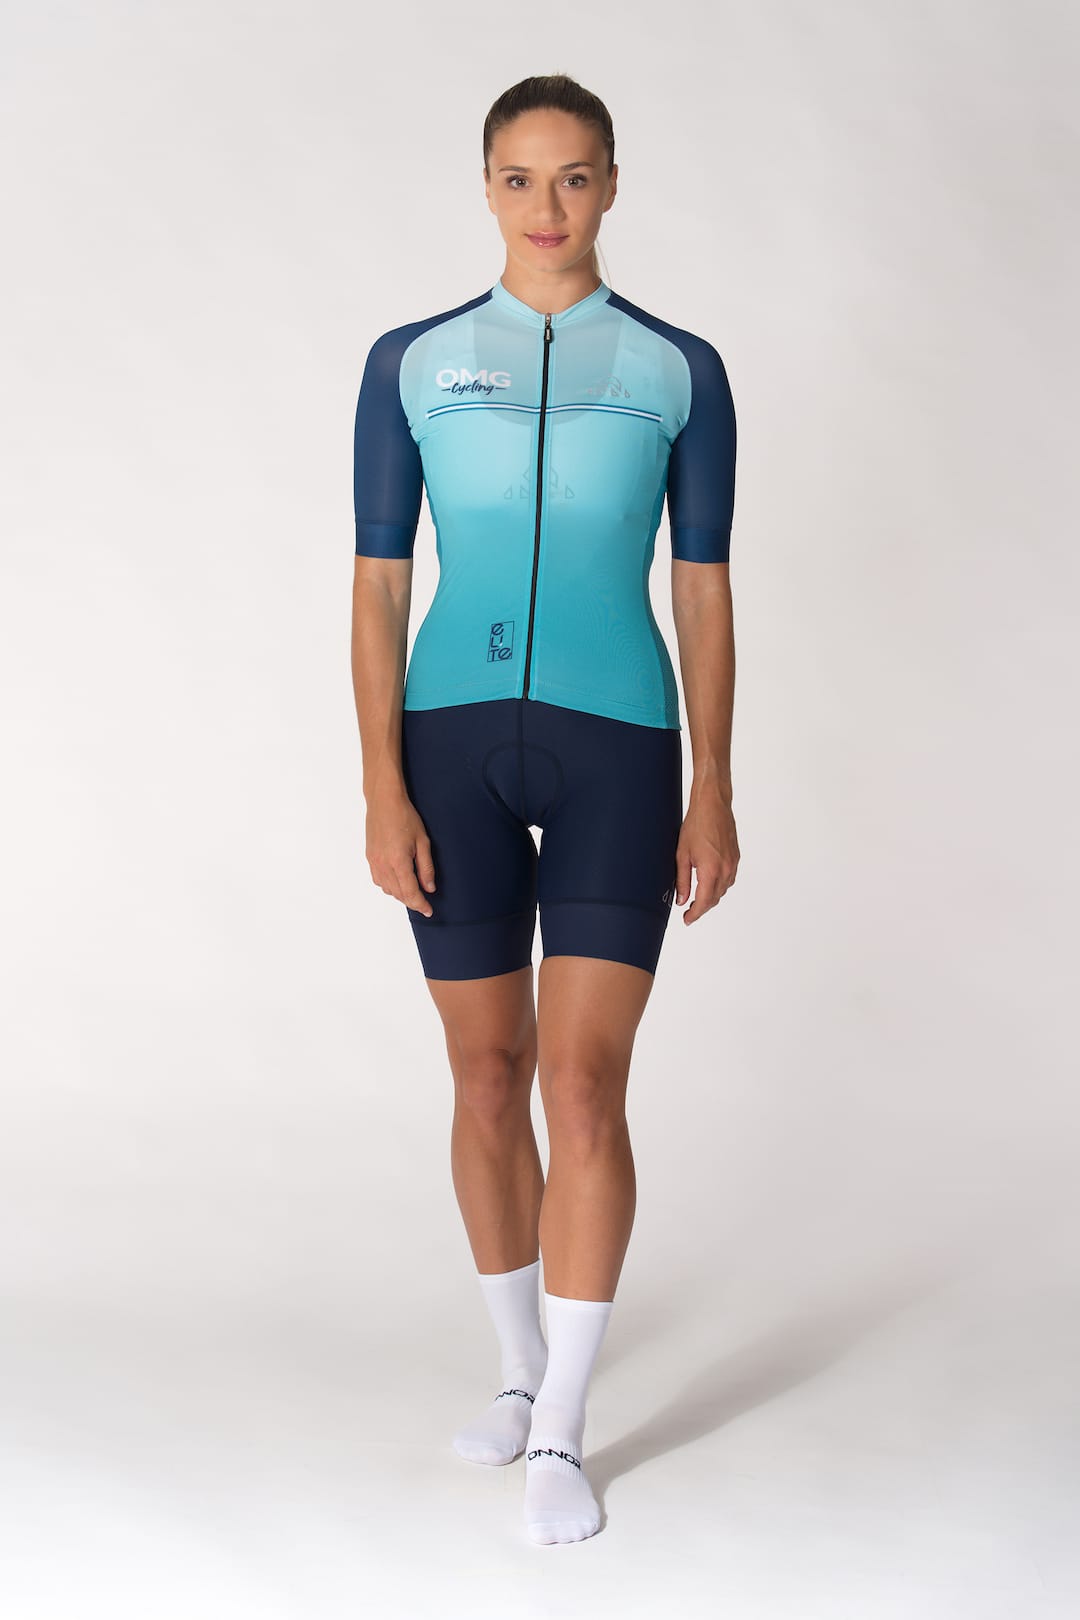 Custom Designed Cycling Jerseys in Miami